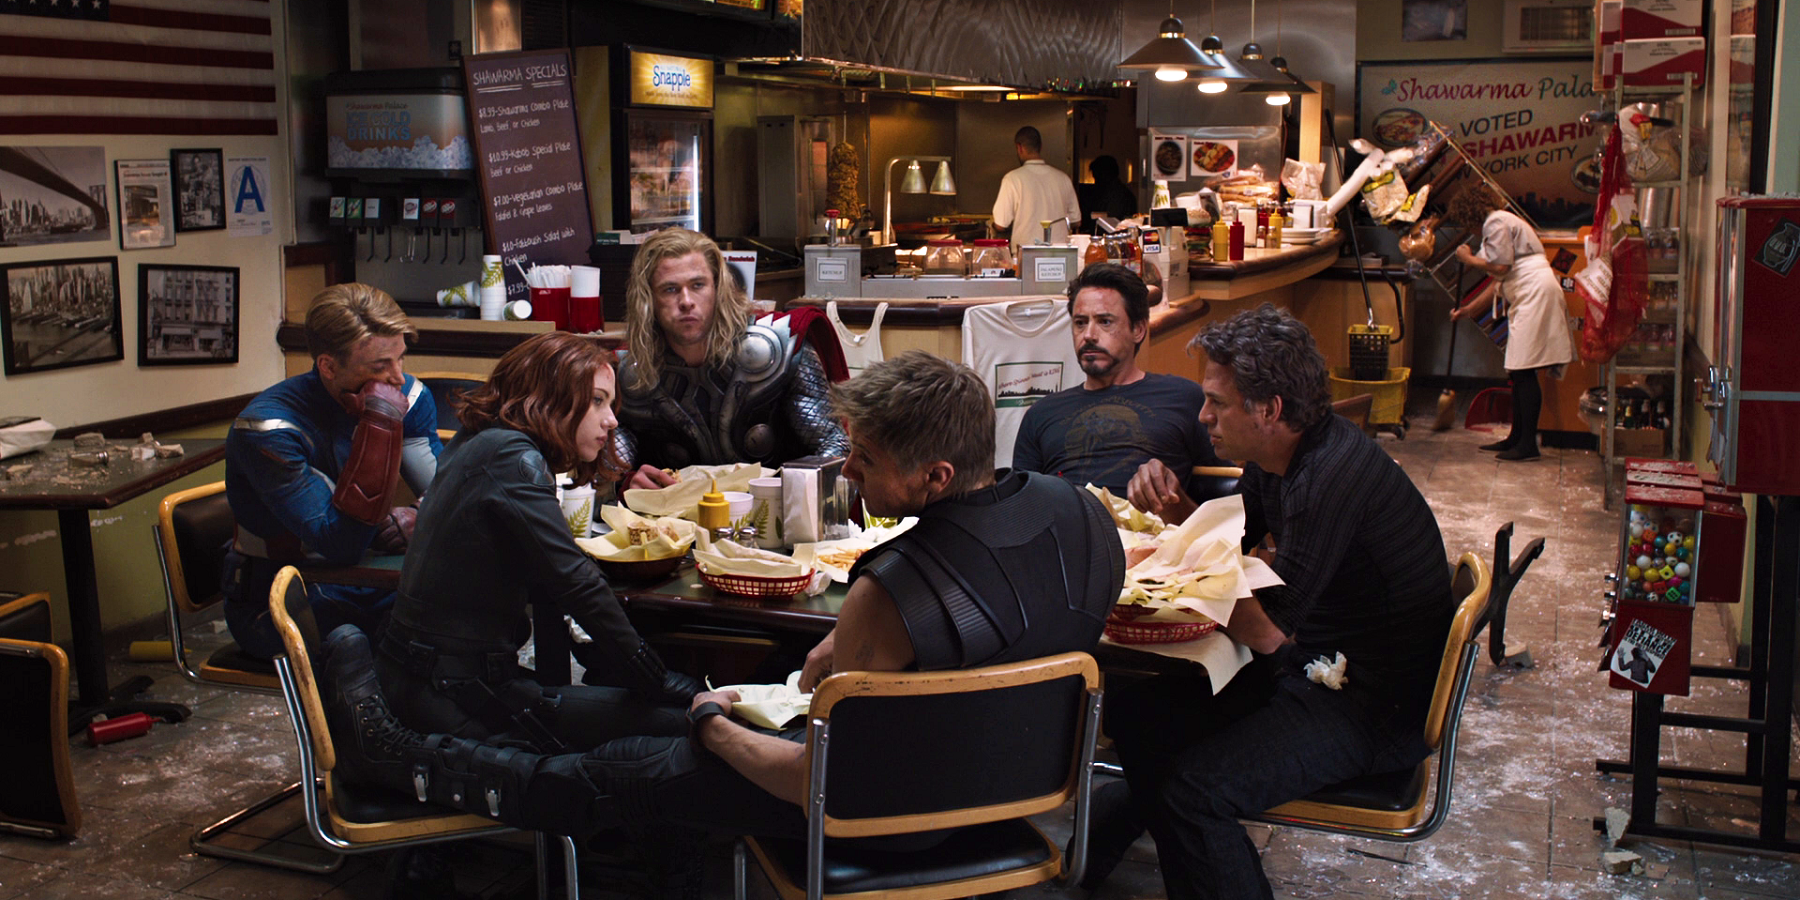 Avengers post-credit shwarma scene